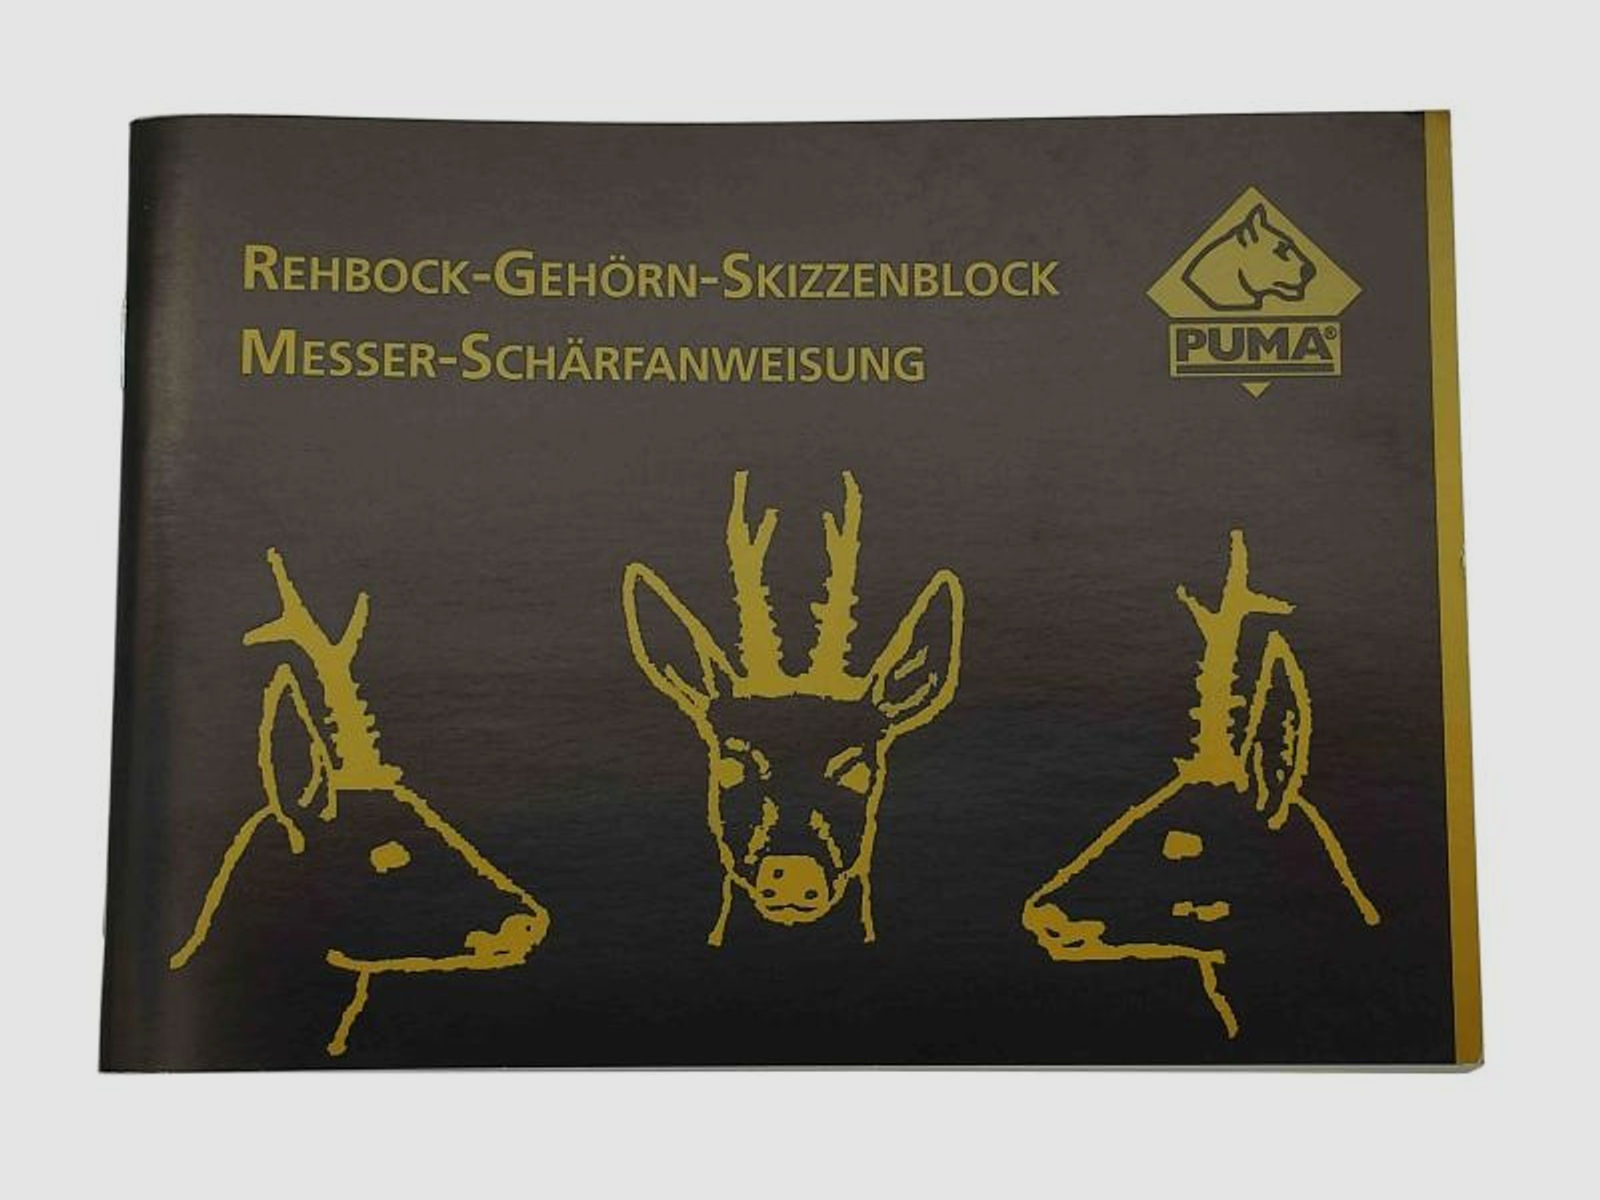 Puma Rehbock-Gehörn-Skizzenblock & Schärfanweisung